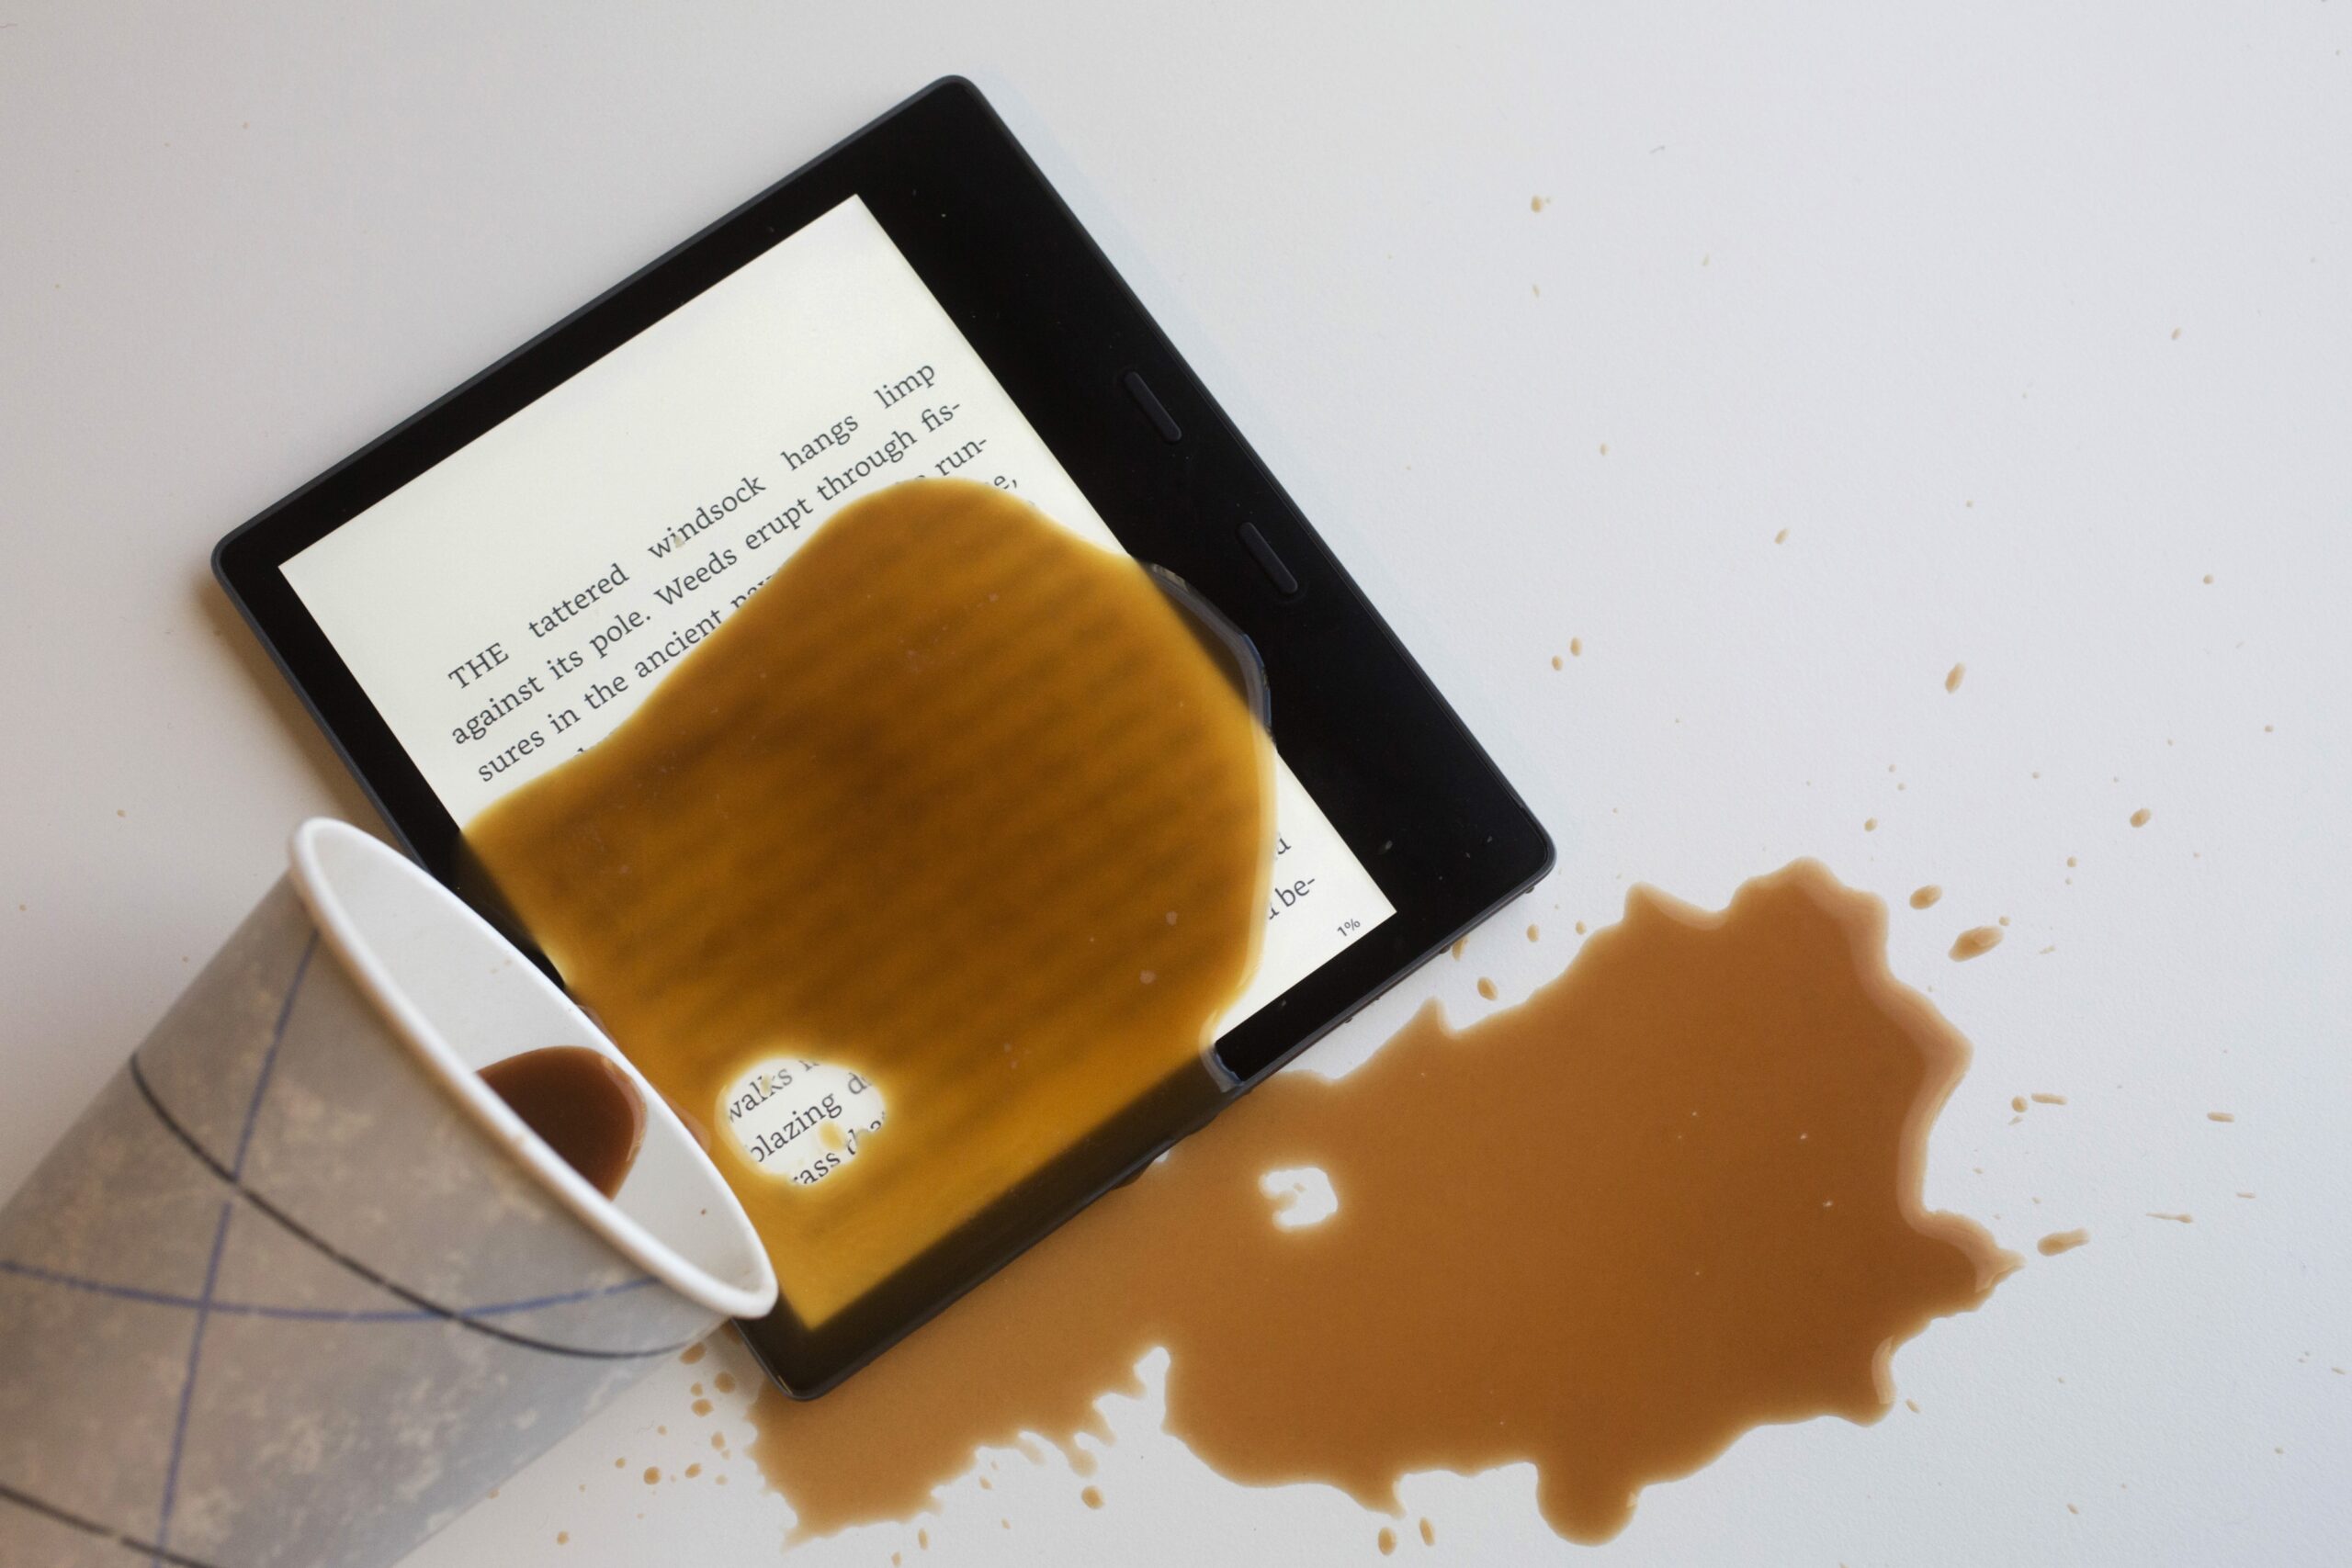 Spilled coffee, e-reader